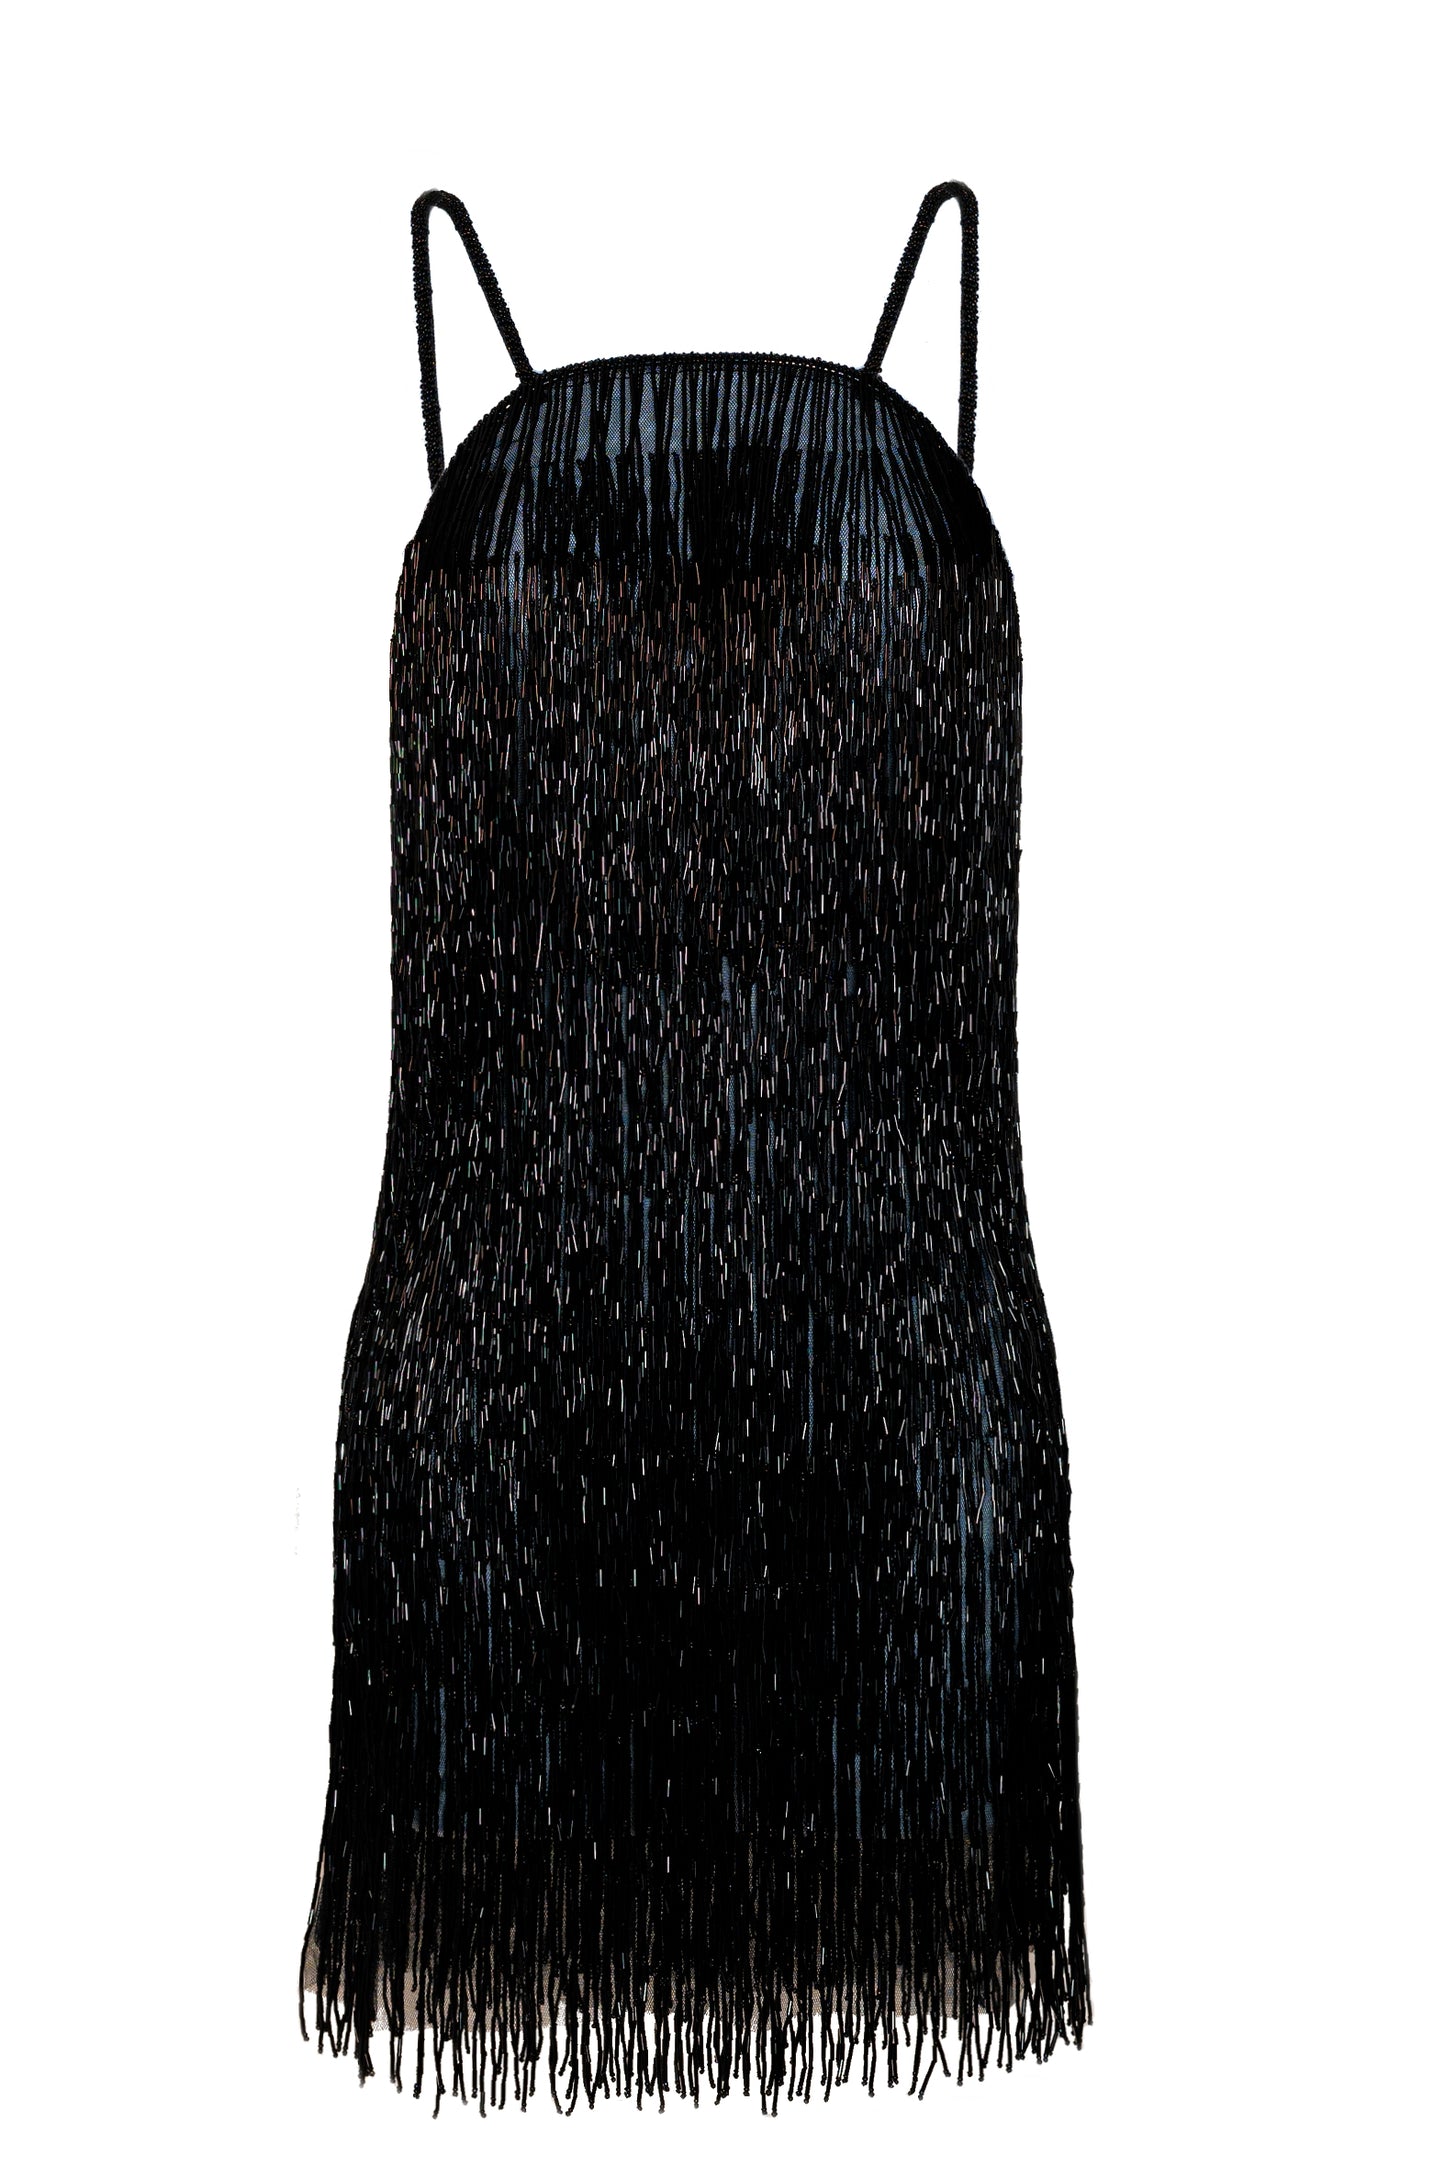 Iris Black Edition Dress